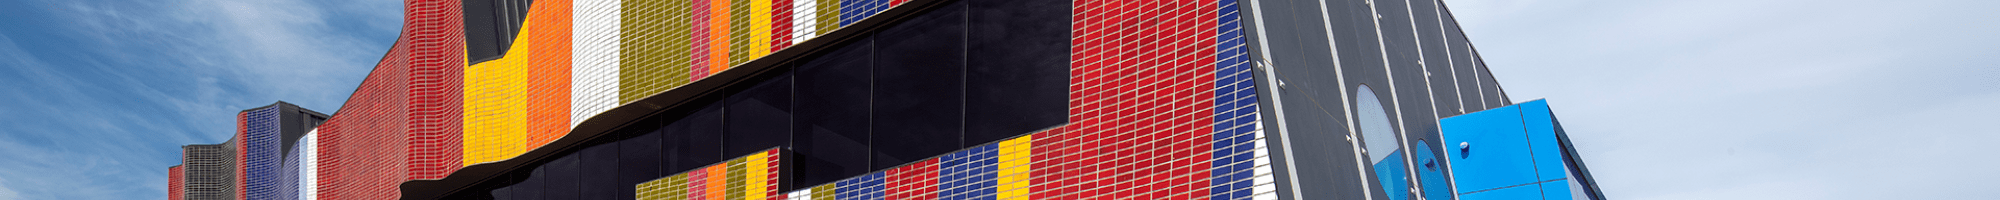 Springvale Community Hub coloured facade 